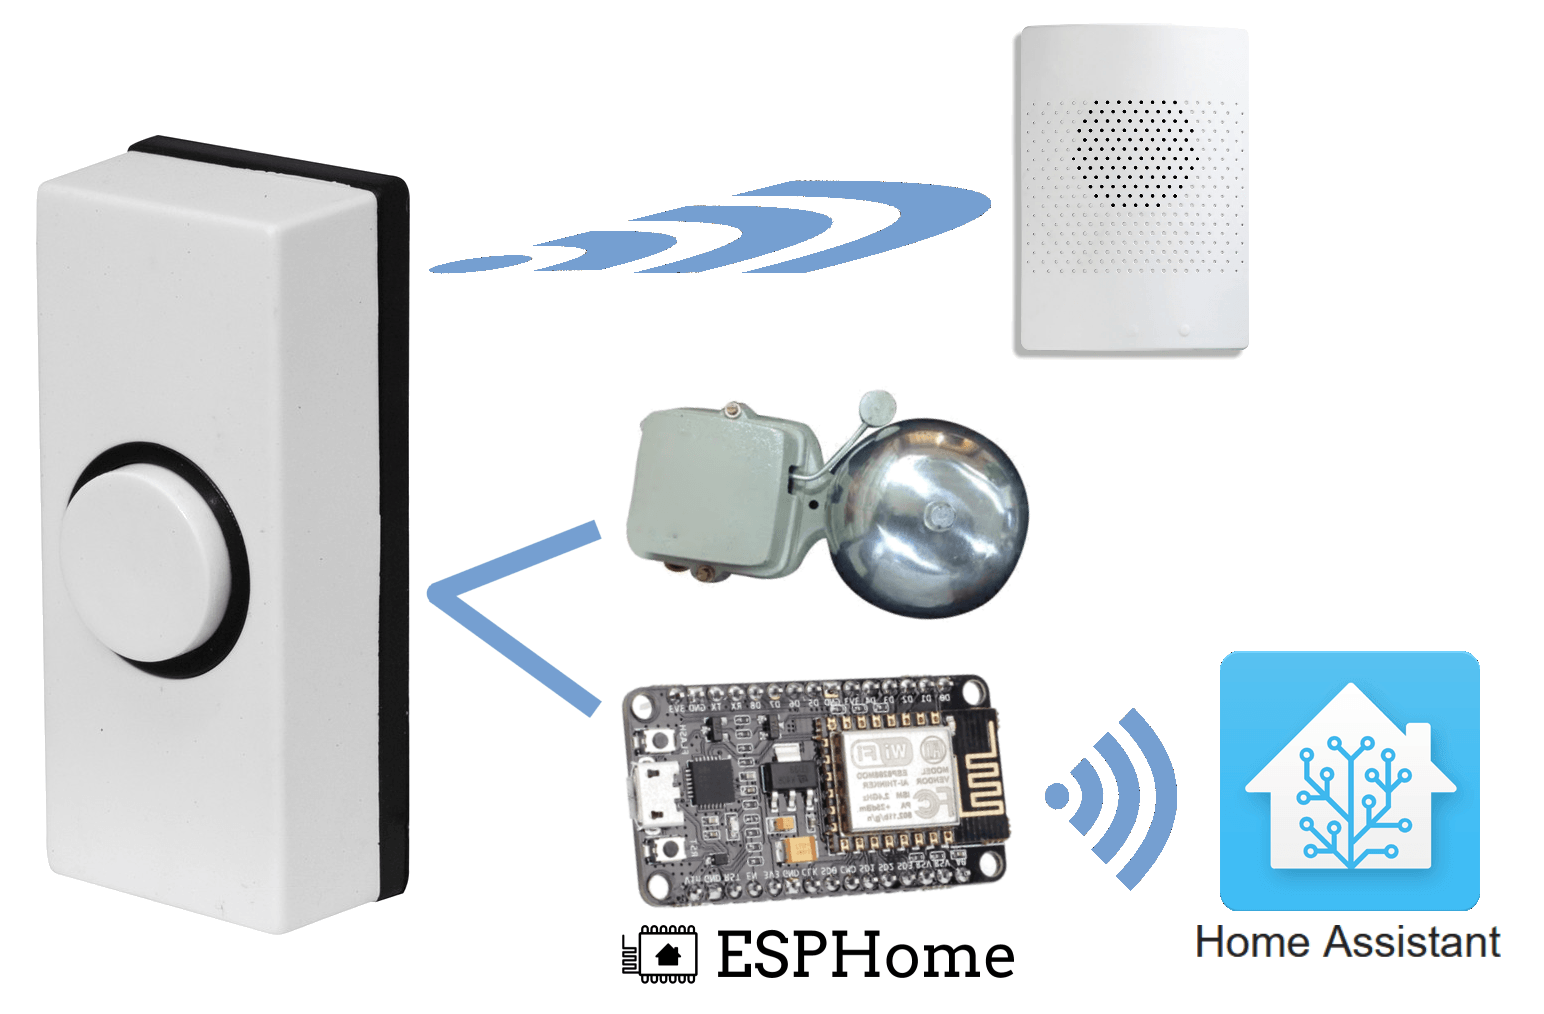 From Ding-Dong Door Chime to IoT Doorbell